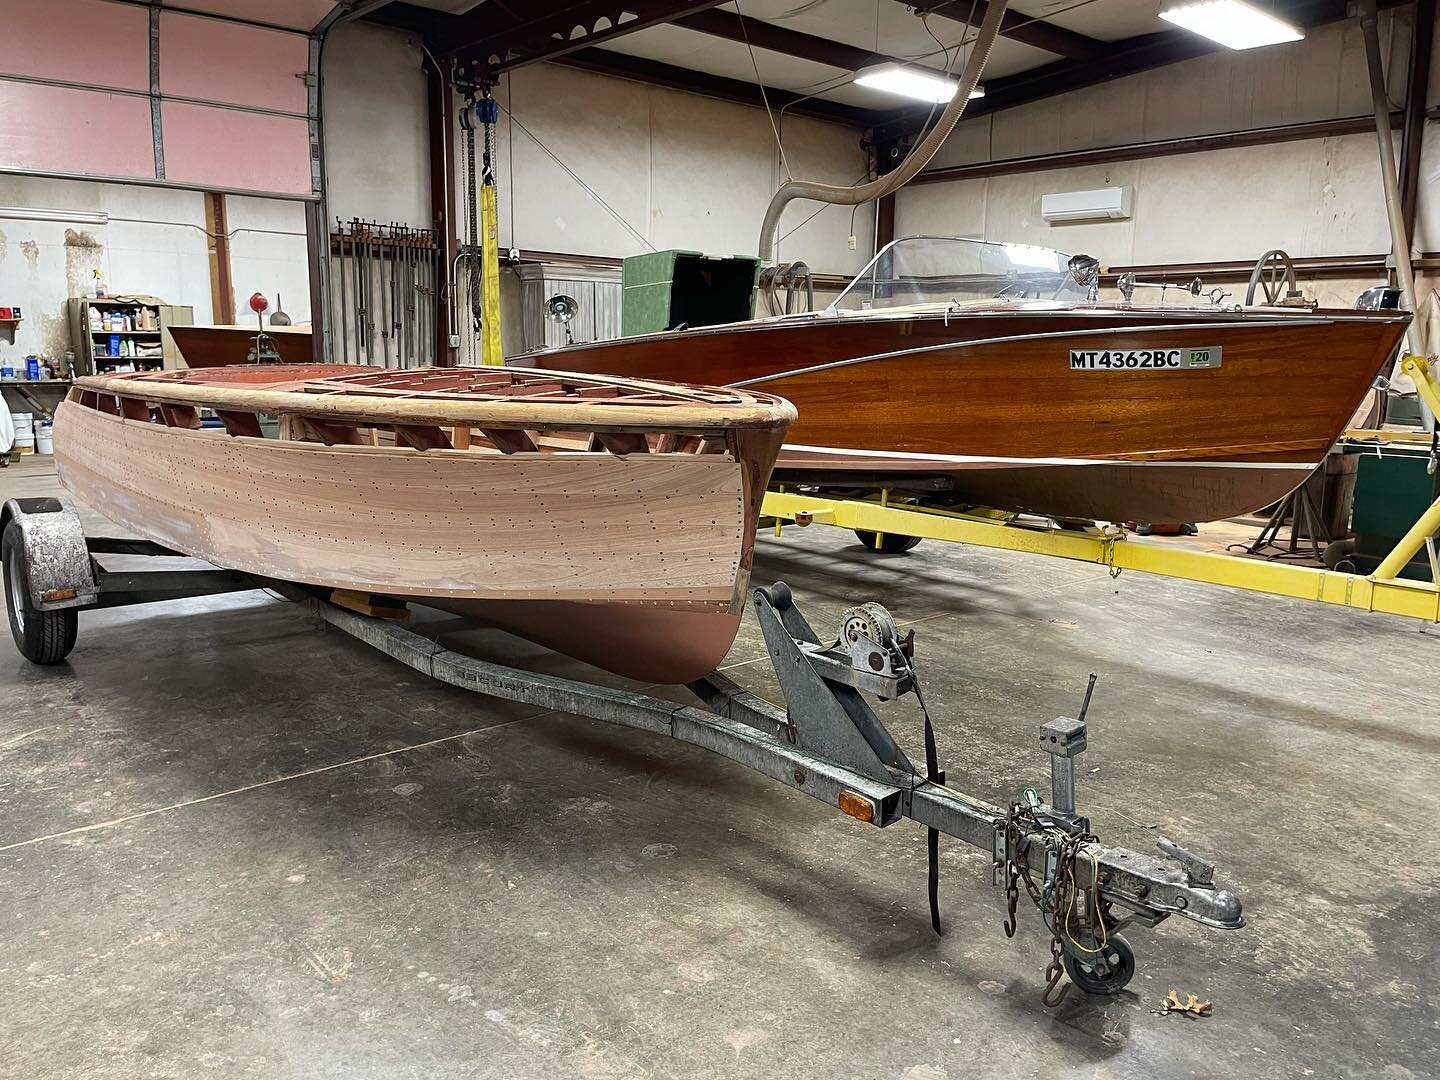 woodenboats #woodyboater
#woodworking
#finewoodworking
#woodboatsarebetter
#wood
#powerboats
#alanjacksonboats
#craftsmanship
#chriscraft
#boats
#mahogany
#boatbuilding
#fiberglassic